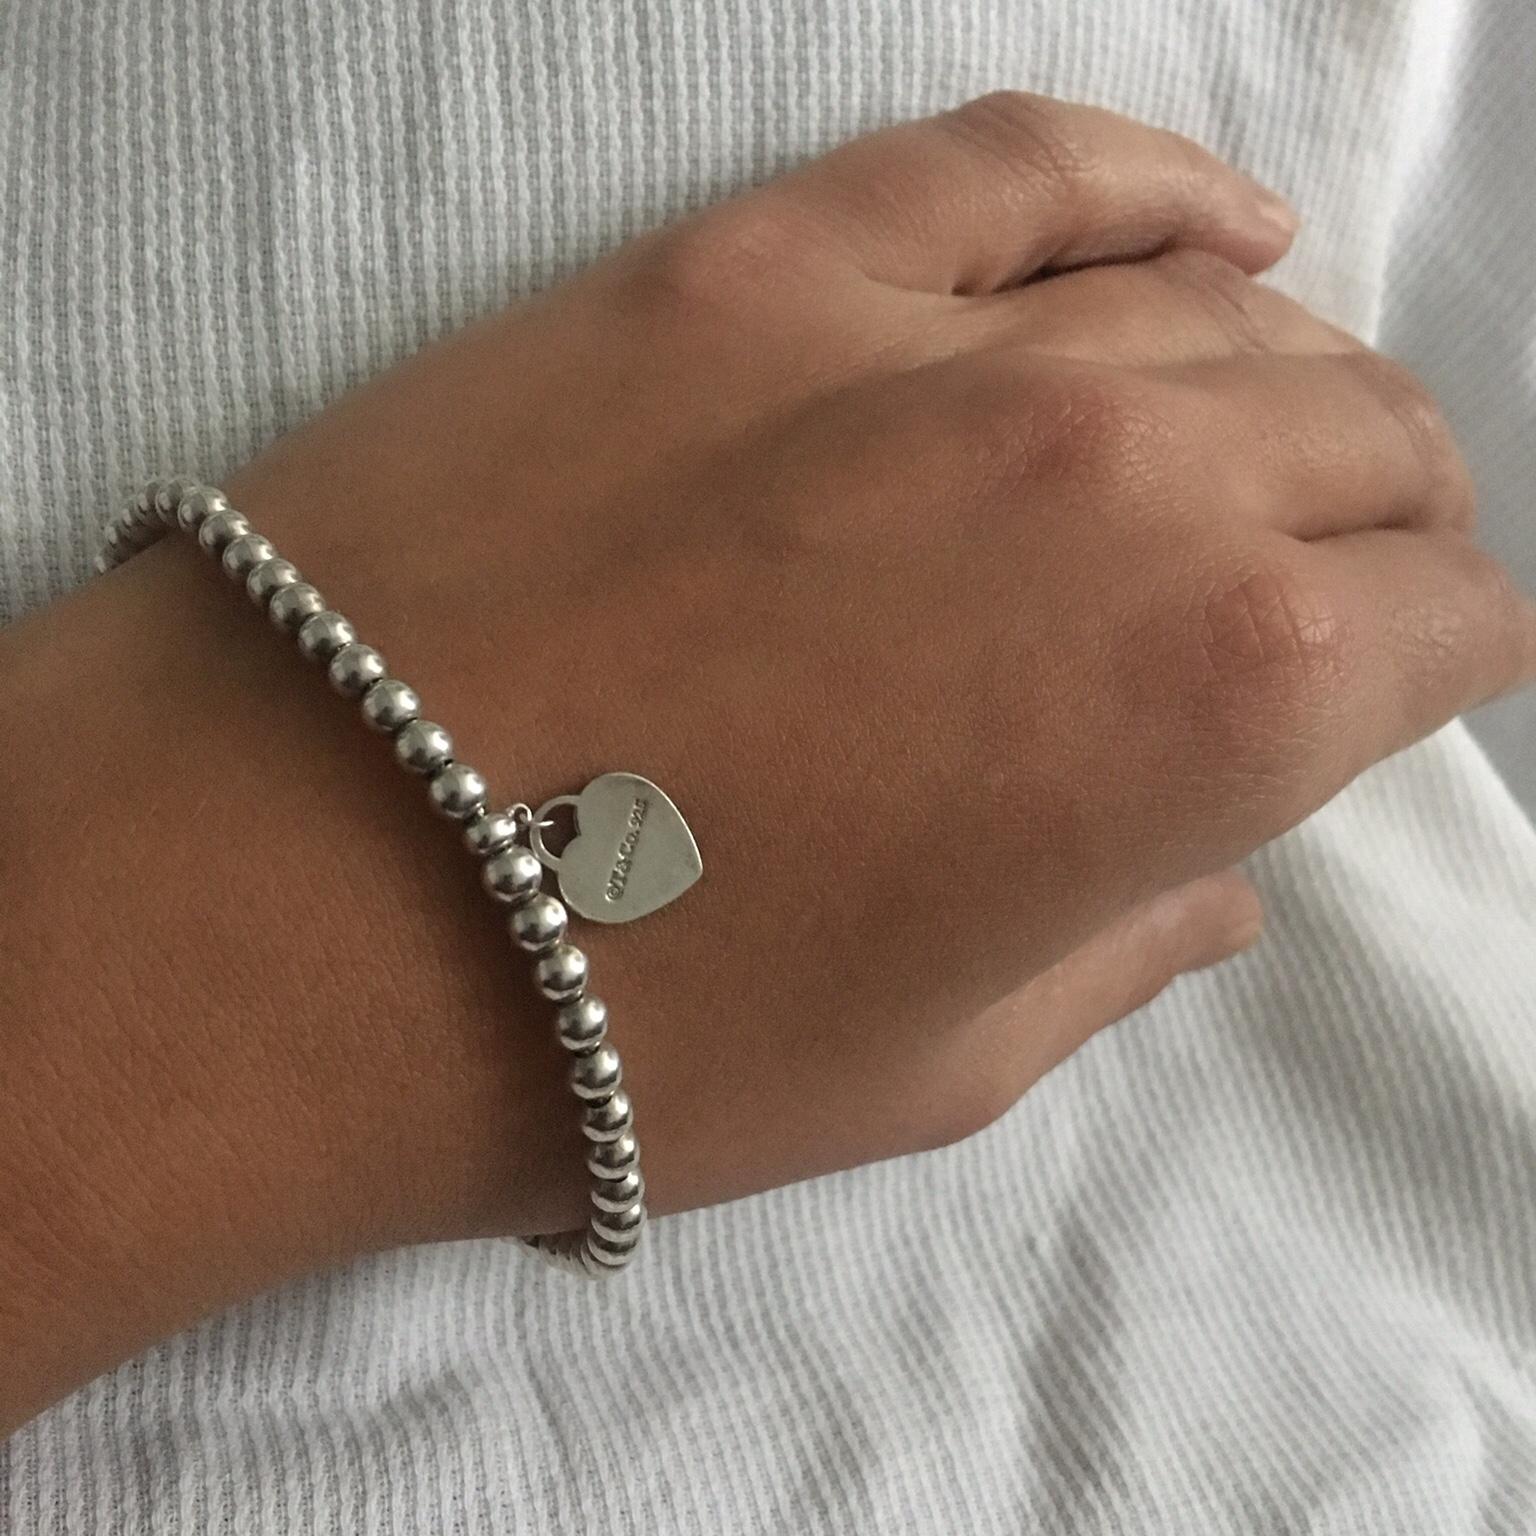 tiffany's engraved bracelet